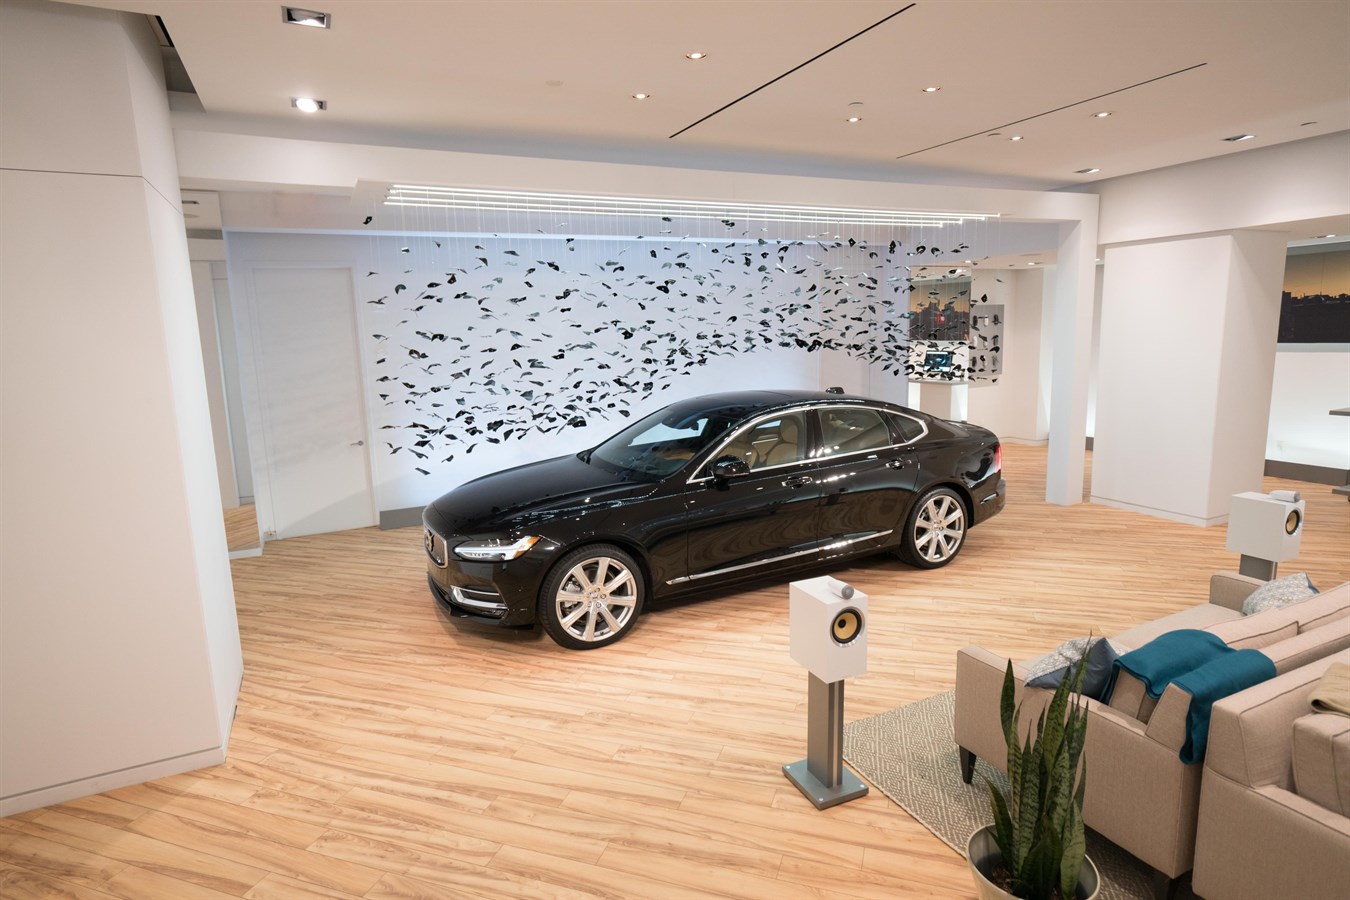 Volvo Opens New York City Pop Up Store